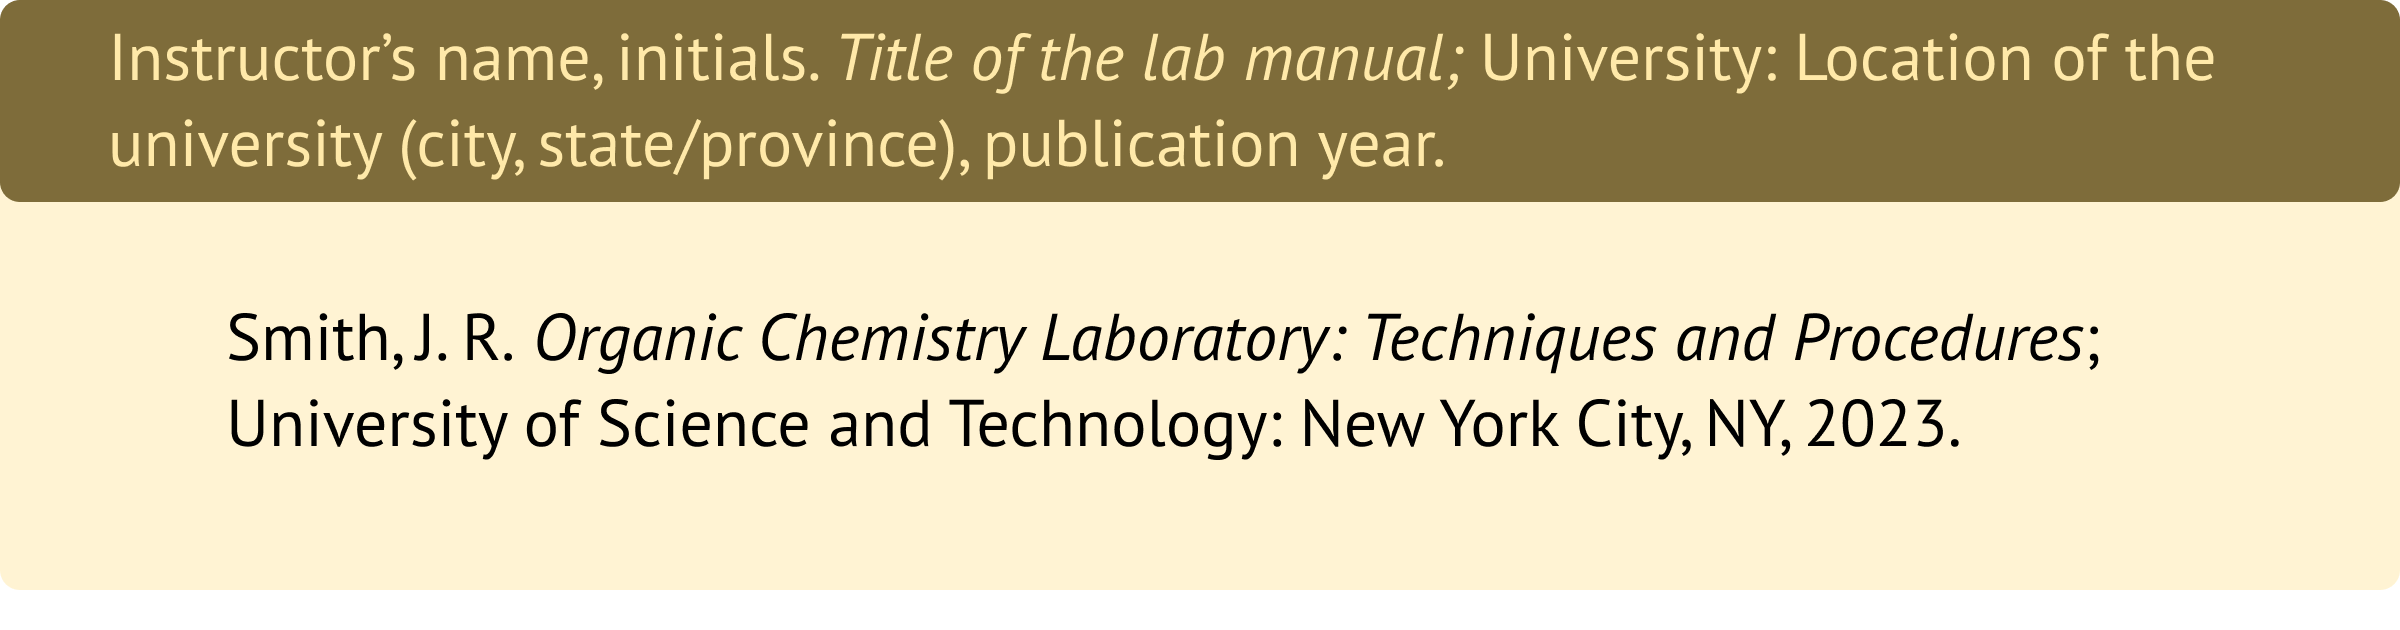 Lab manual citation in ACS